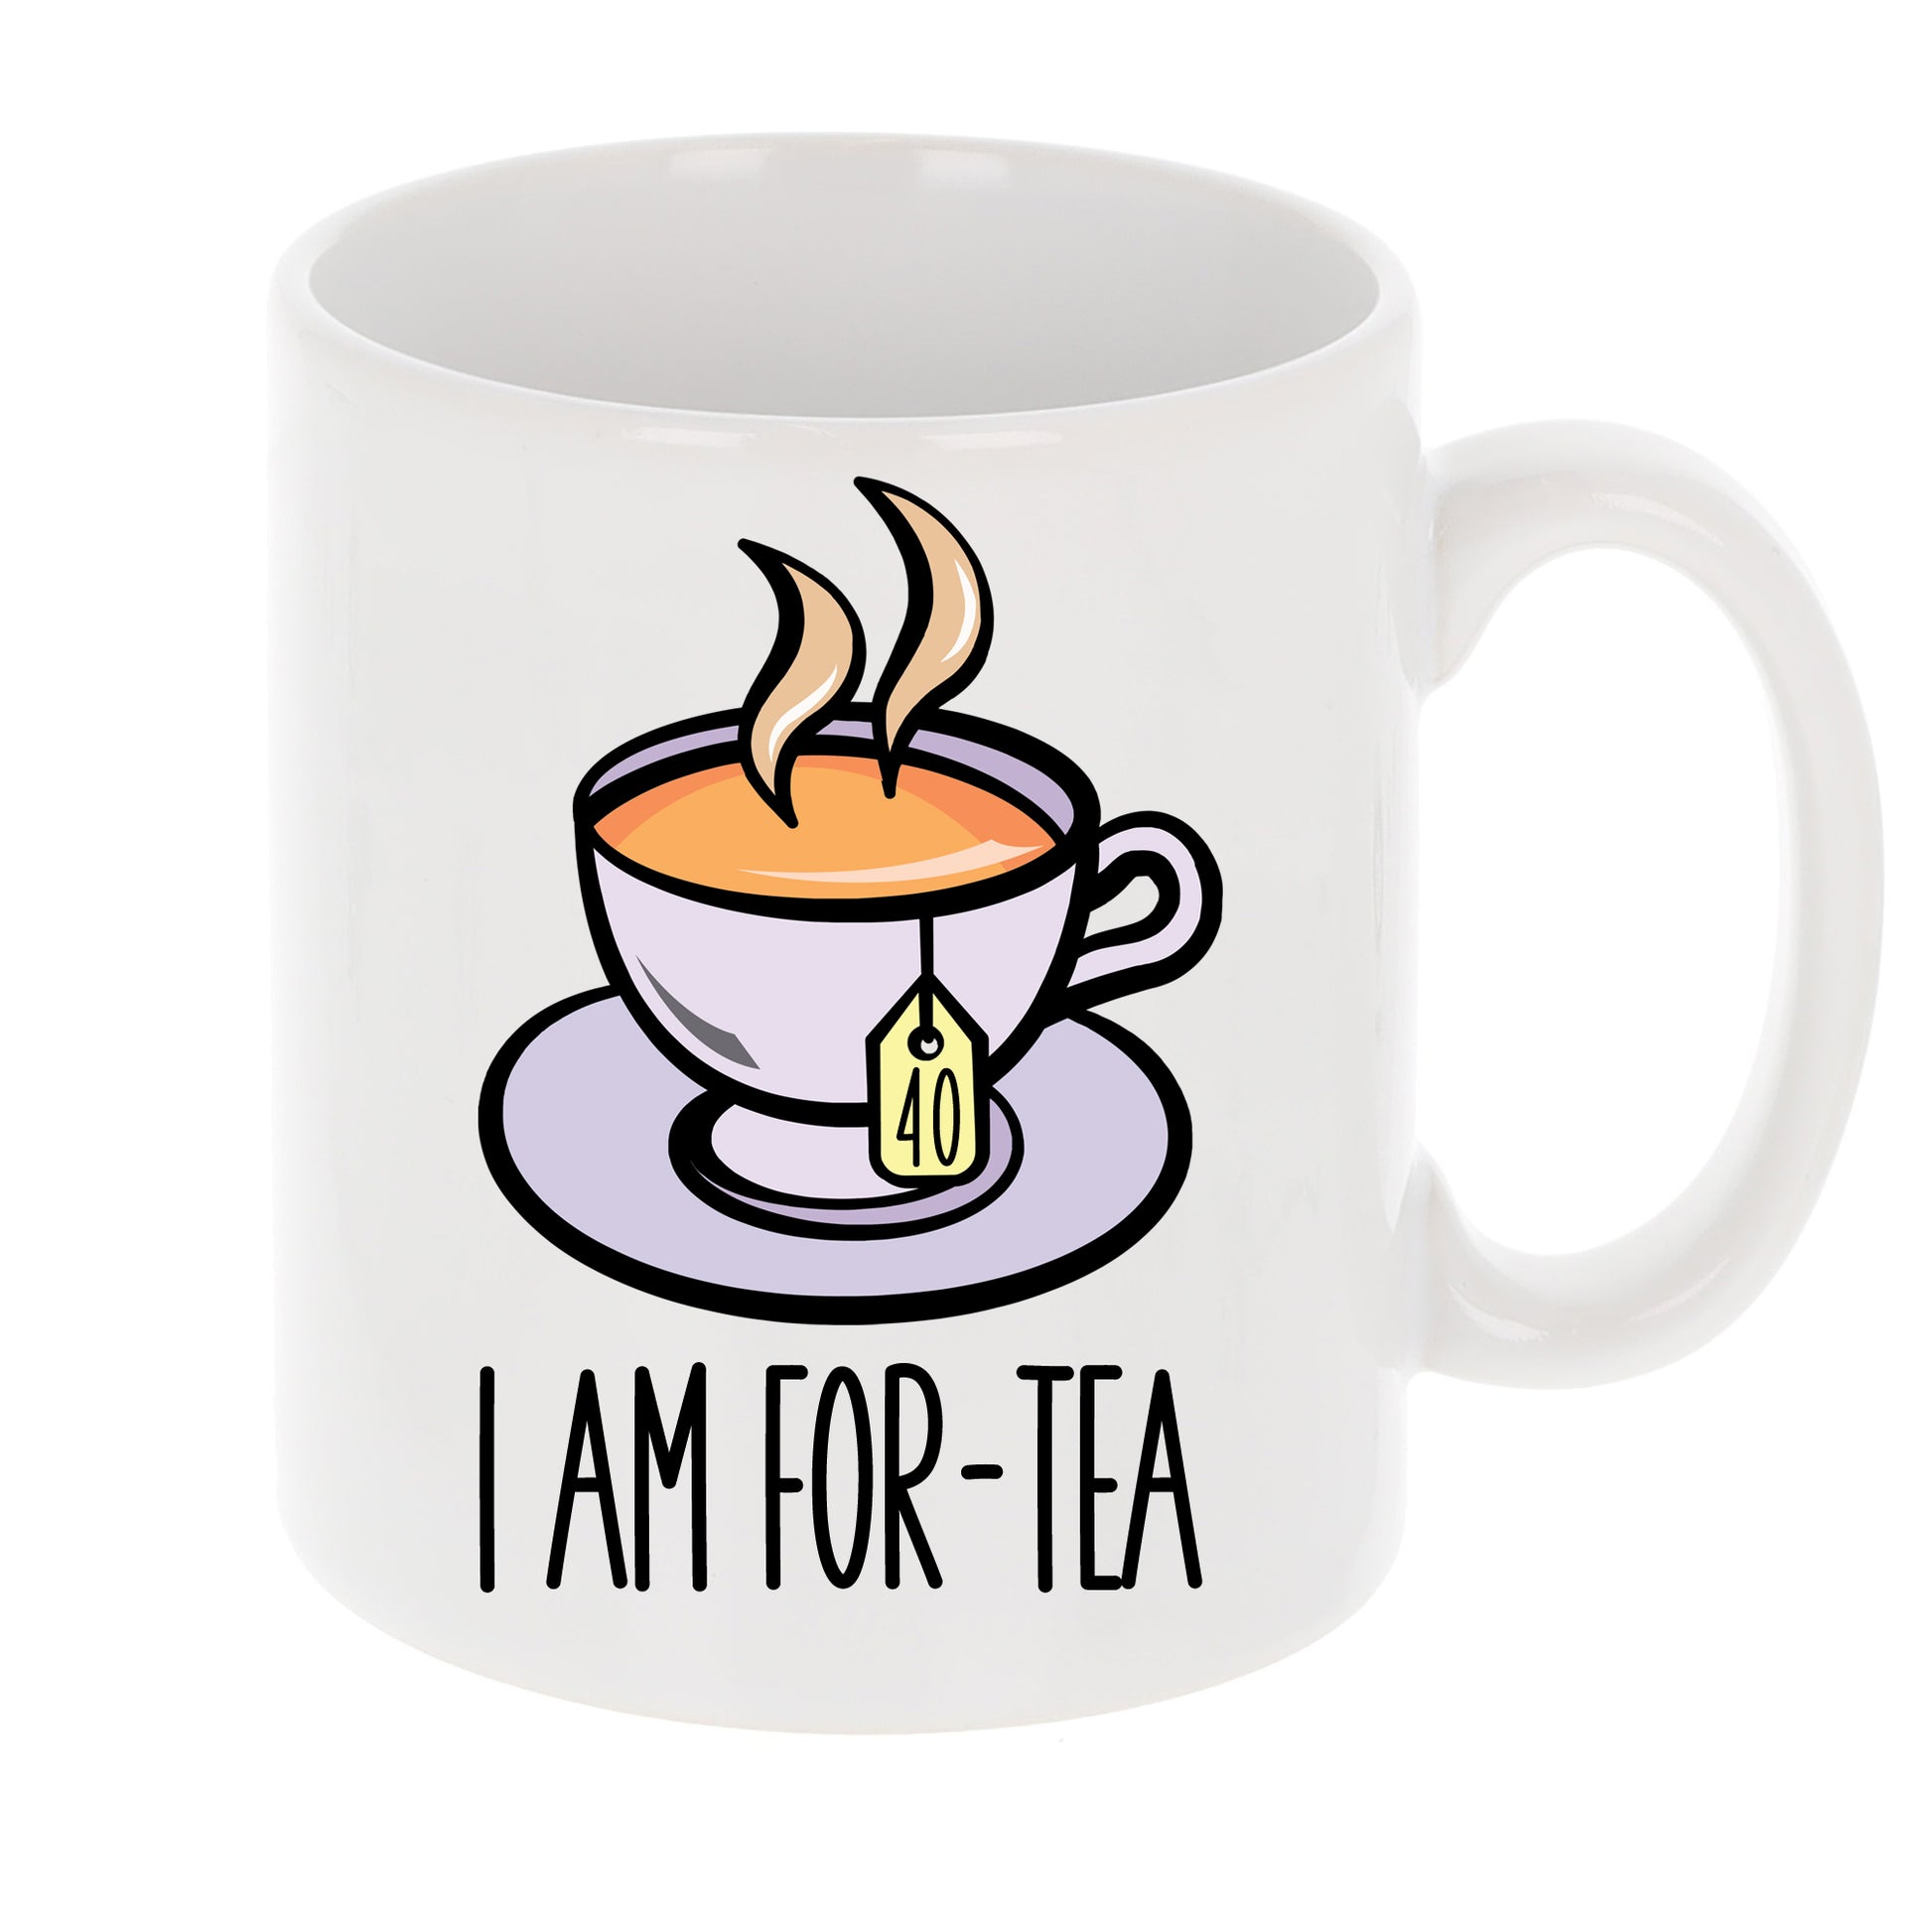 I Am For-Tea Funny 40th Birthday Mug Gift for Tea Lovers  - Always Looking Good - Mug Only  